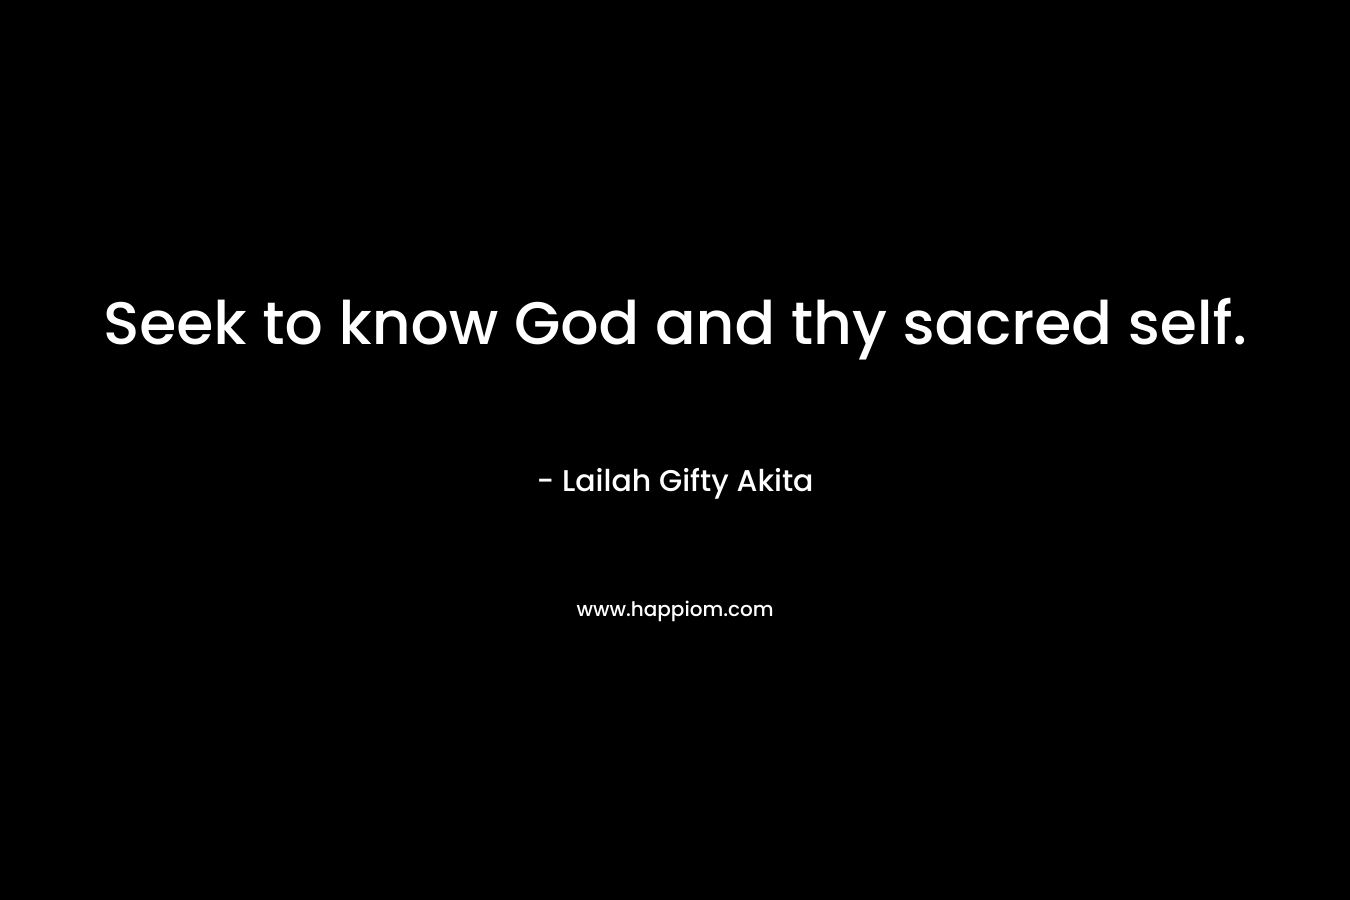 Seek to know God and thy sacred self.